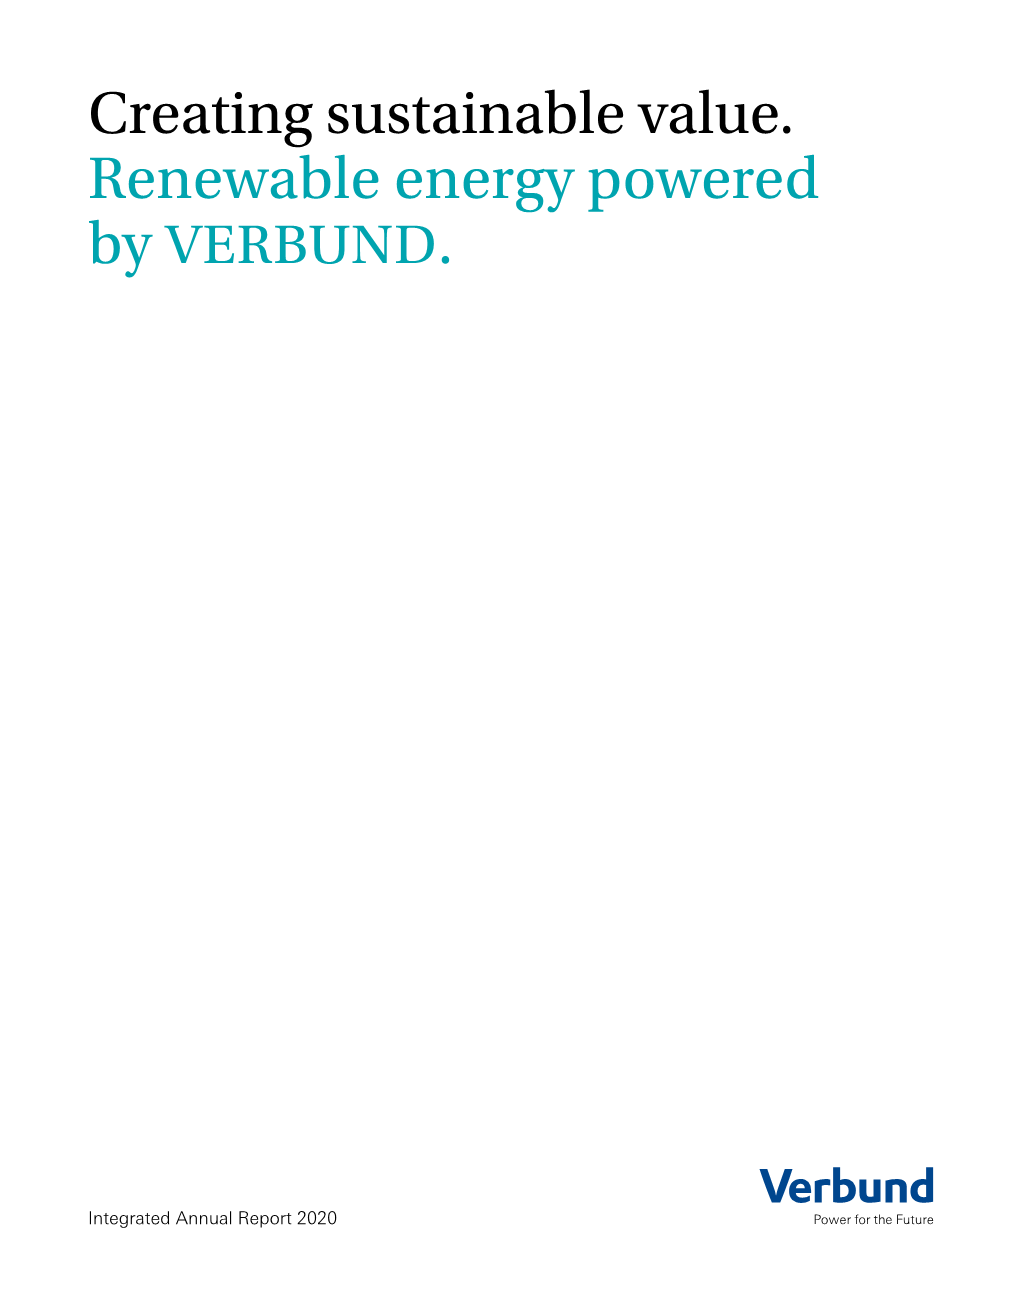 Creating Sustainable Value. Renewable Energy Powered by VERBUND